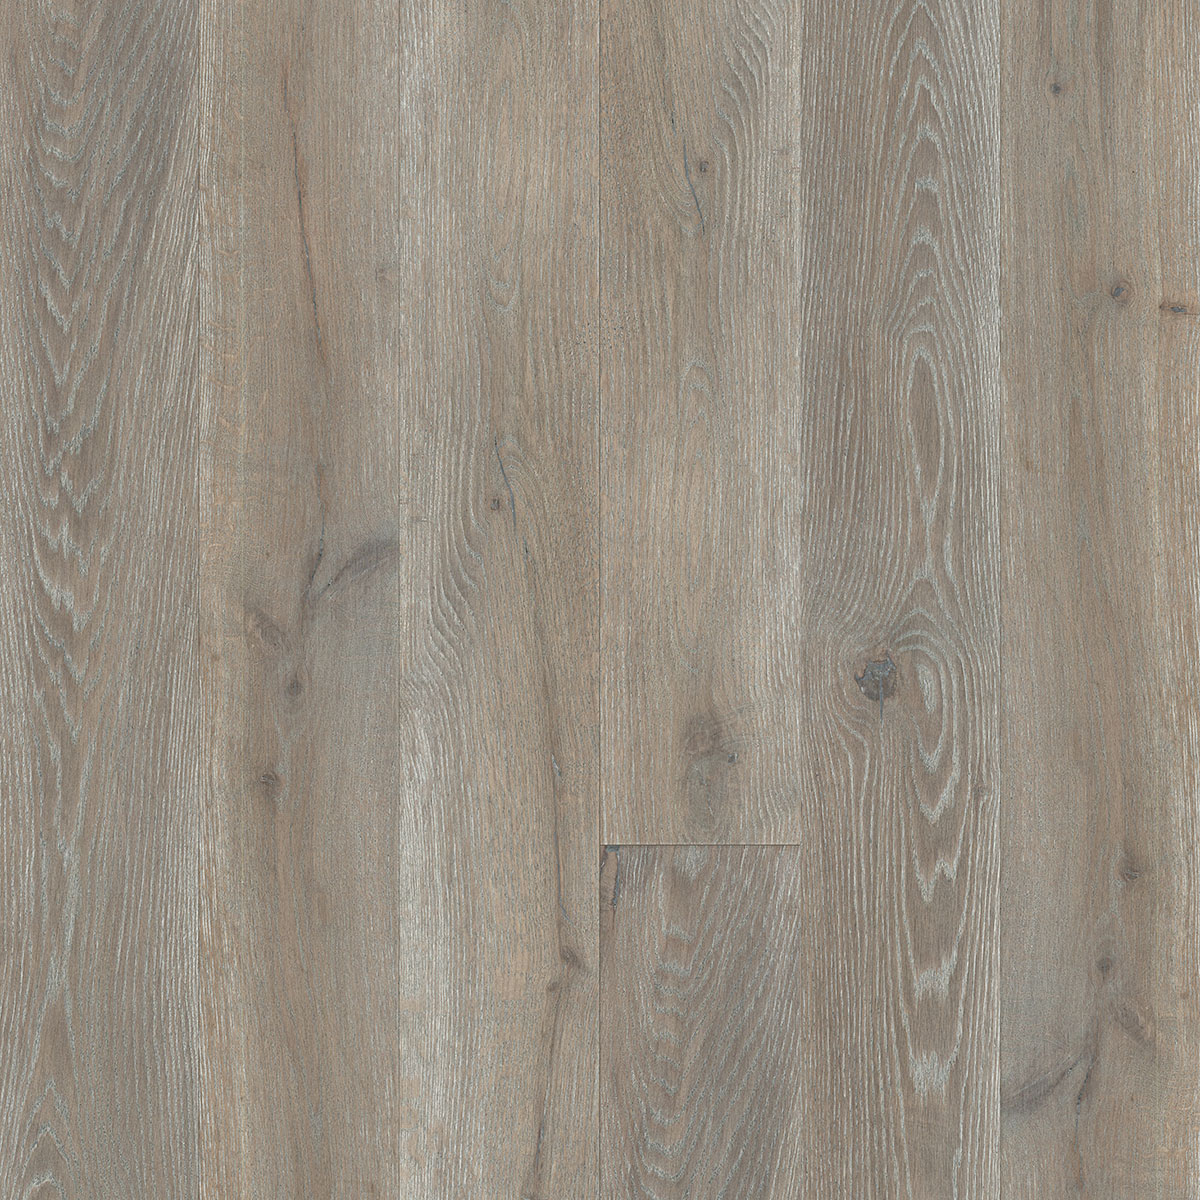 Multiply oak wood flooring named Essence Oiled Oak